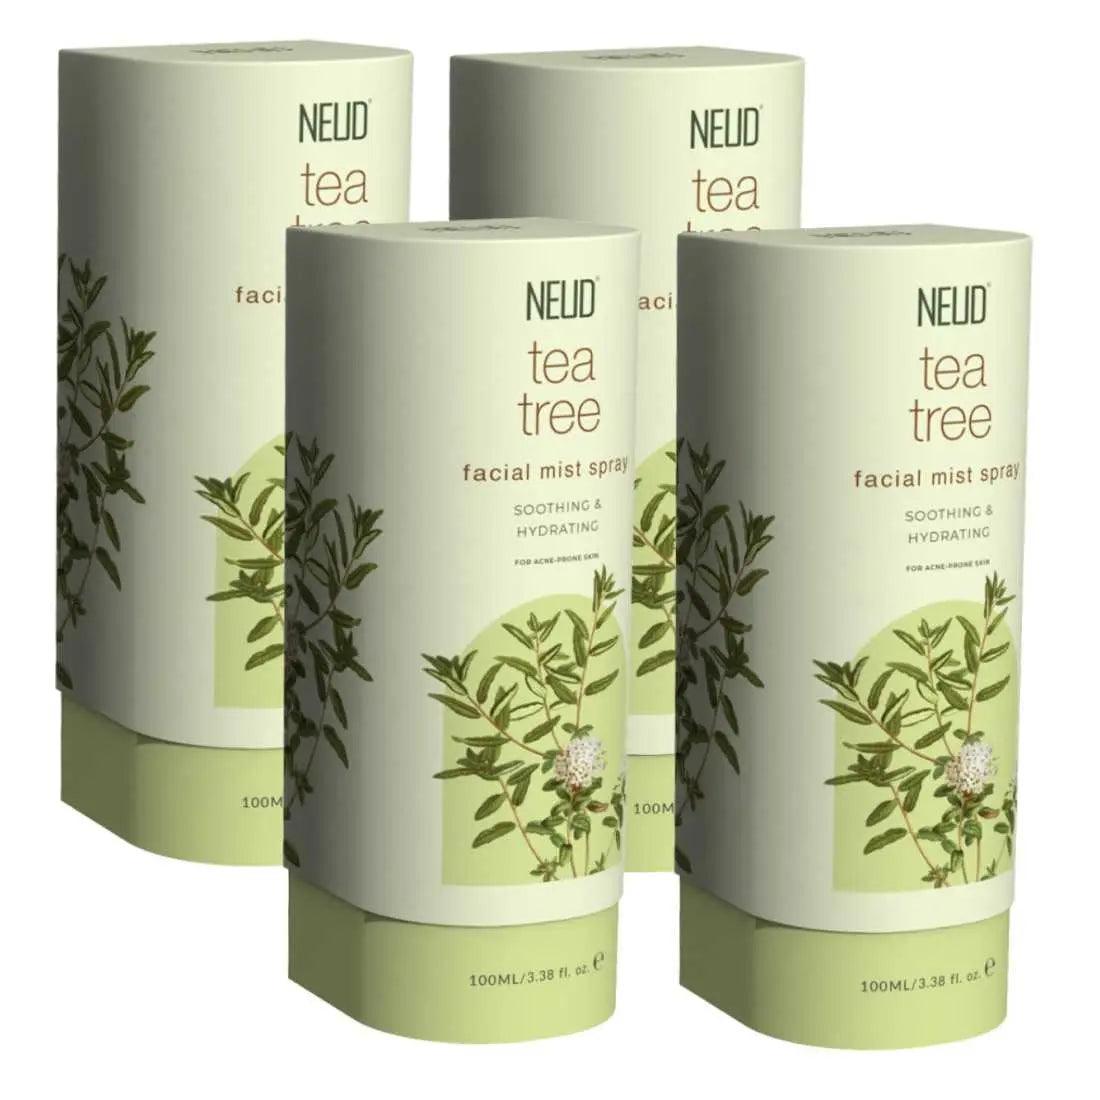 NEUD Tea Tree Facial Mist Spray For Acne-Prone Skin - 100 ml 9559682313720